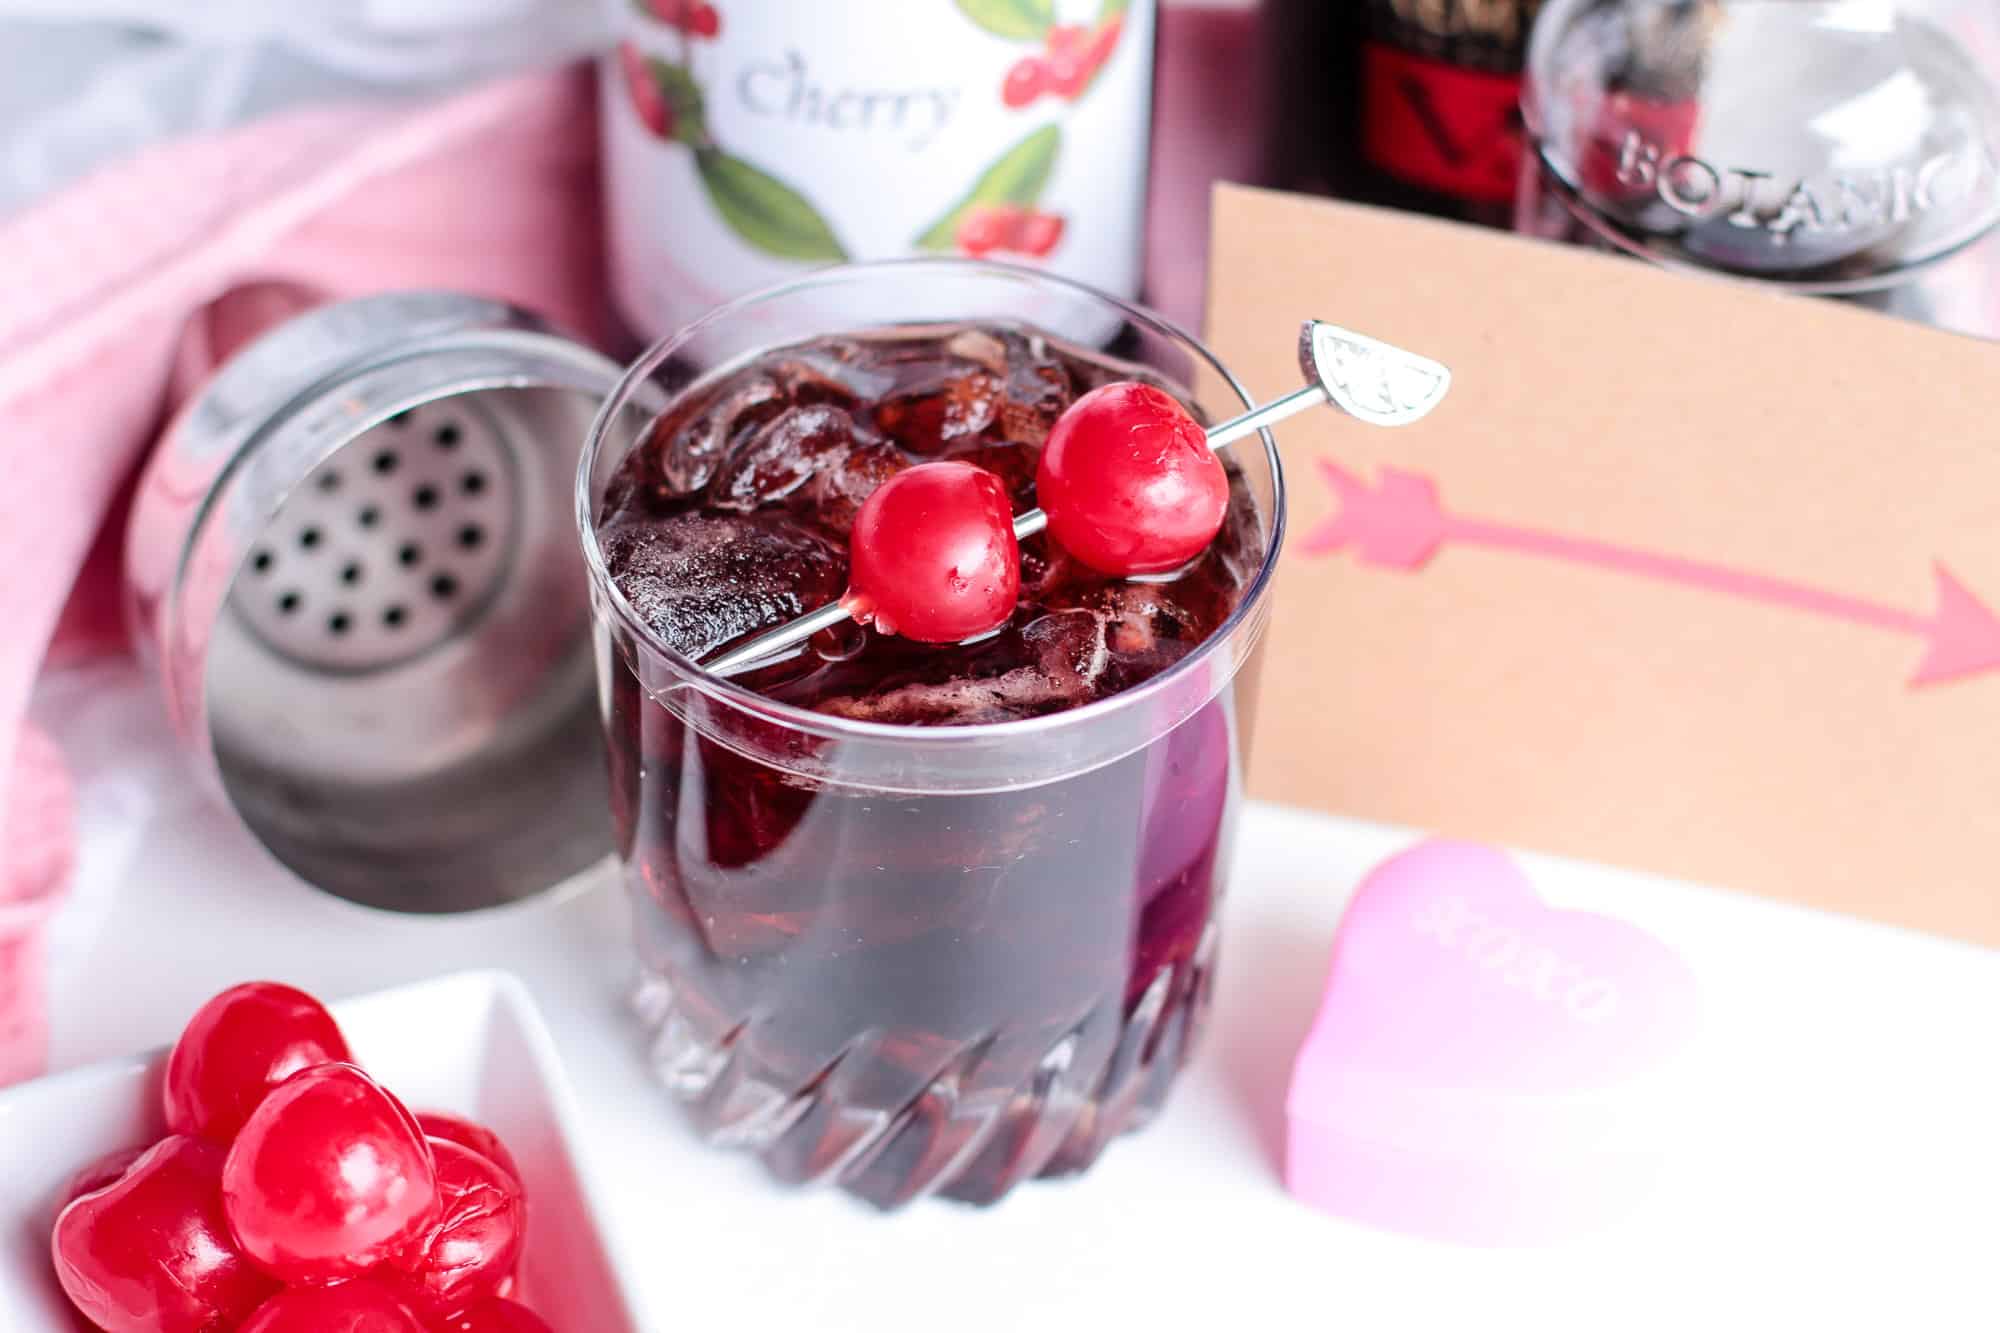 My Cherry Valentine - Cherry Brandy Cocktail with Cognac